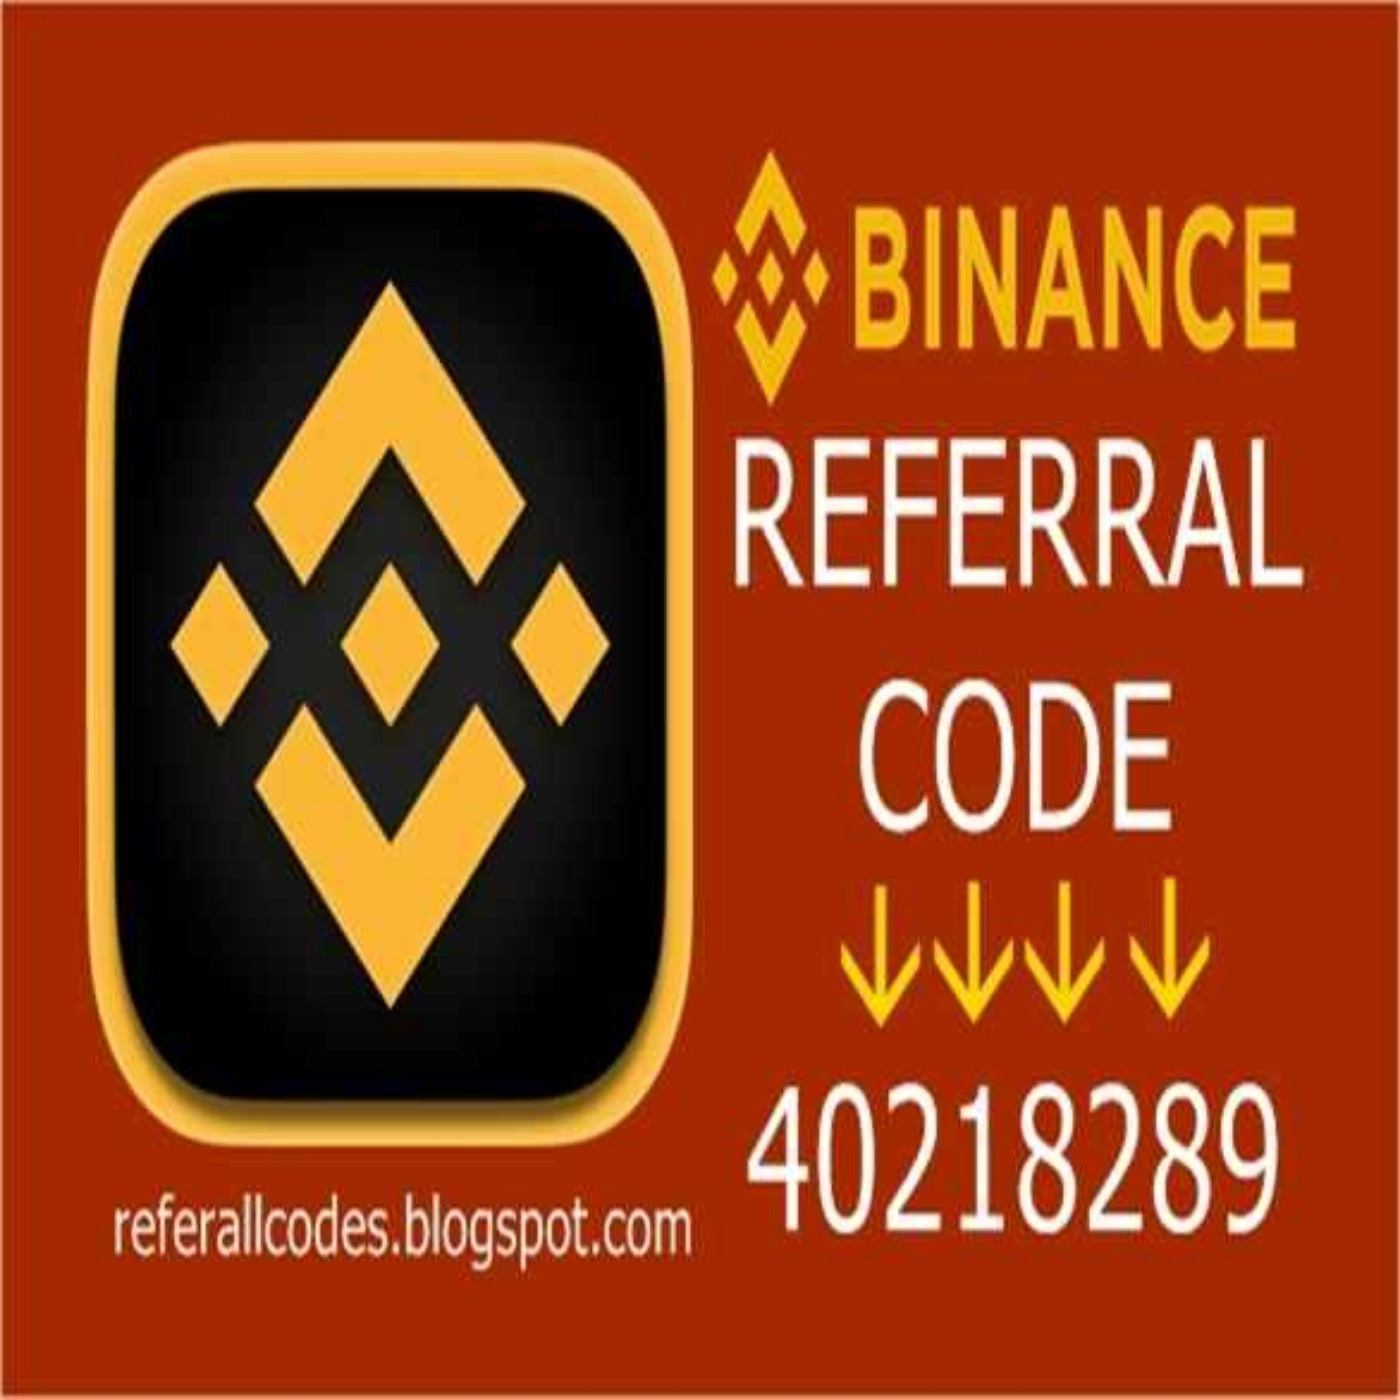 voskcoin binance referral code